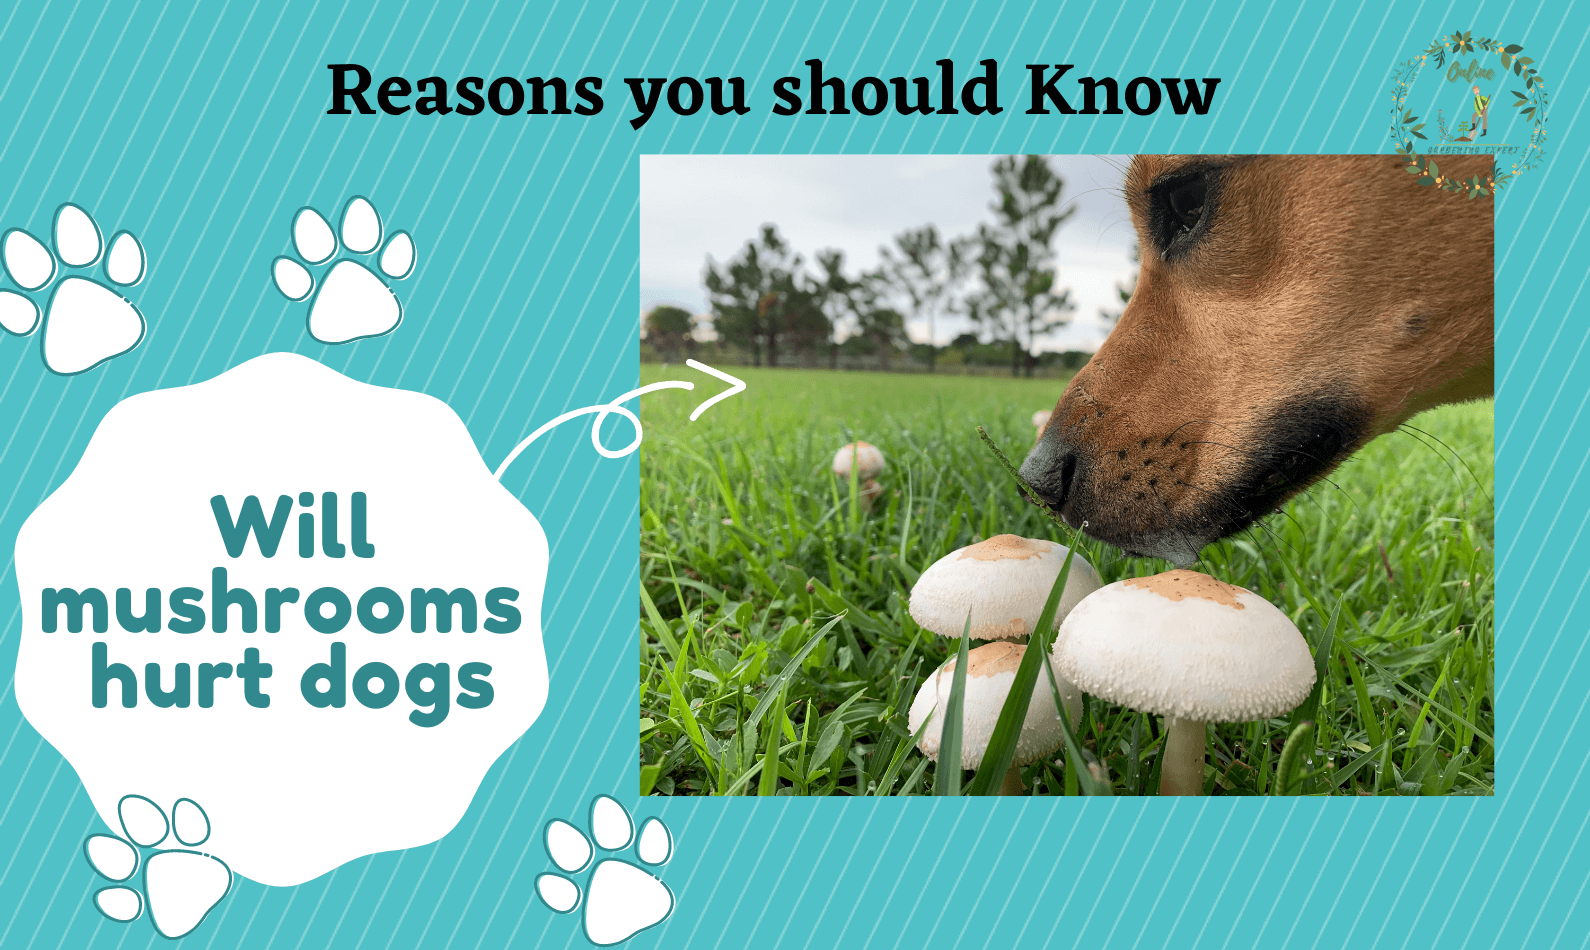 will mushrooms hurt dogs